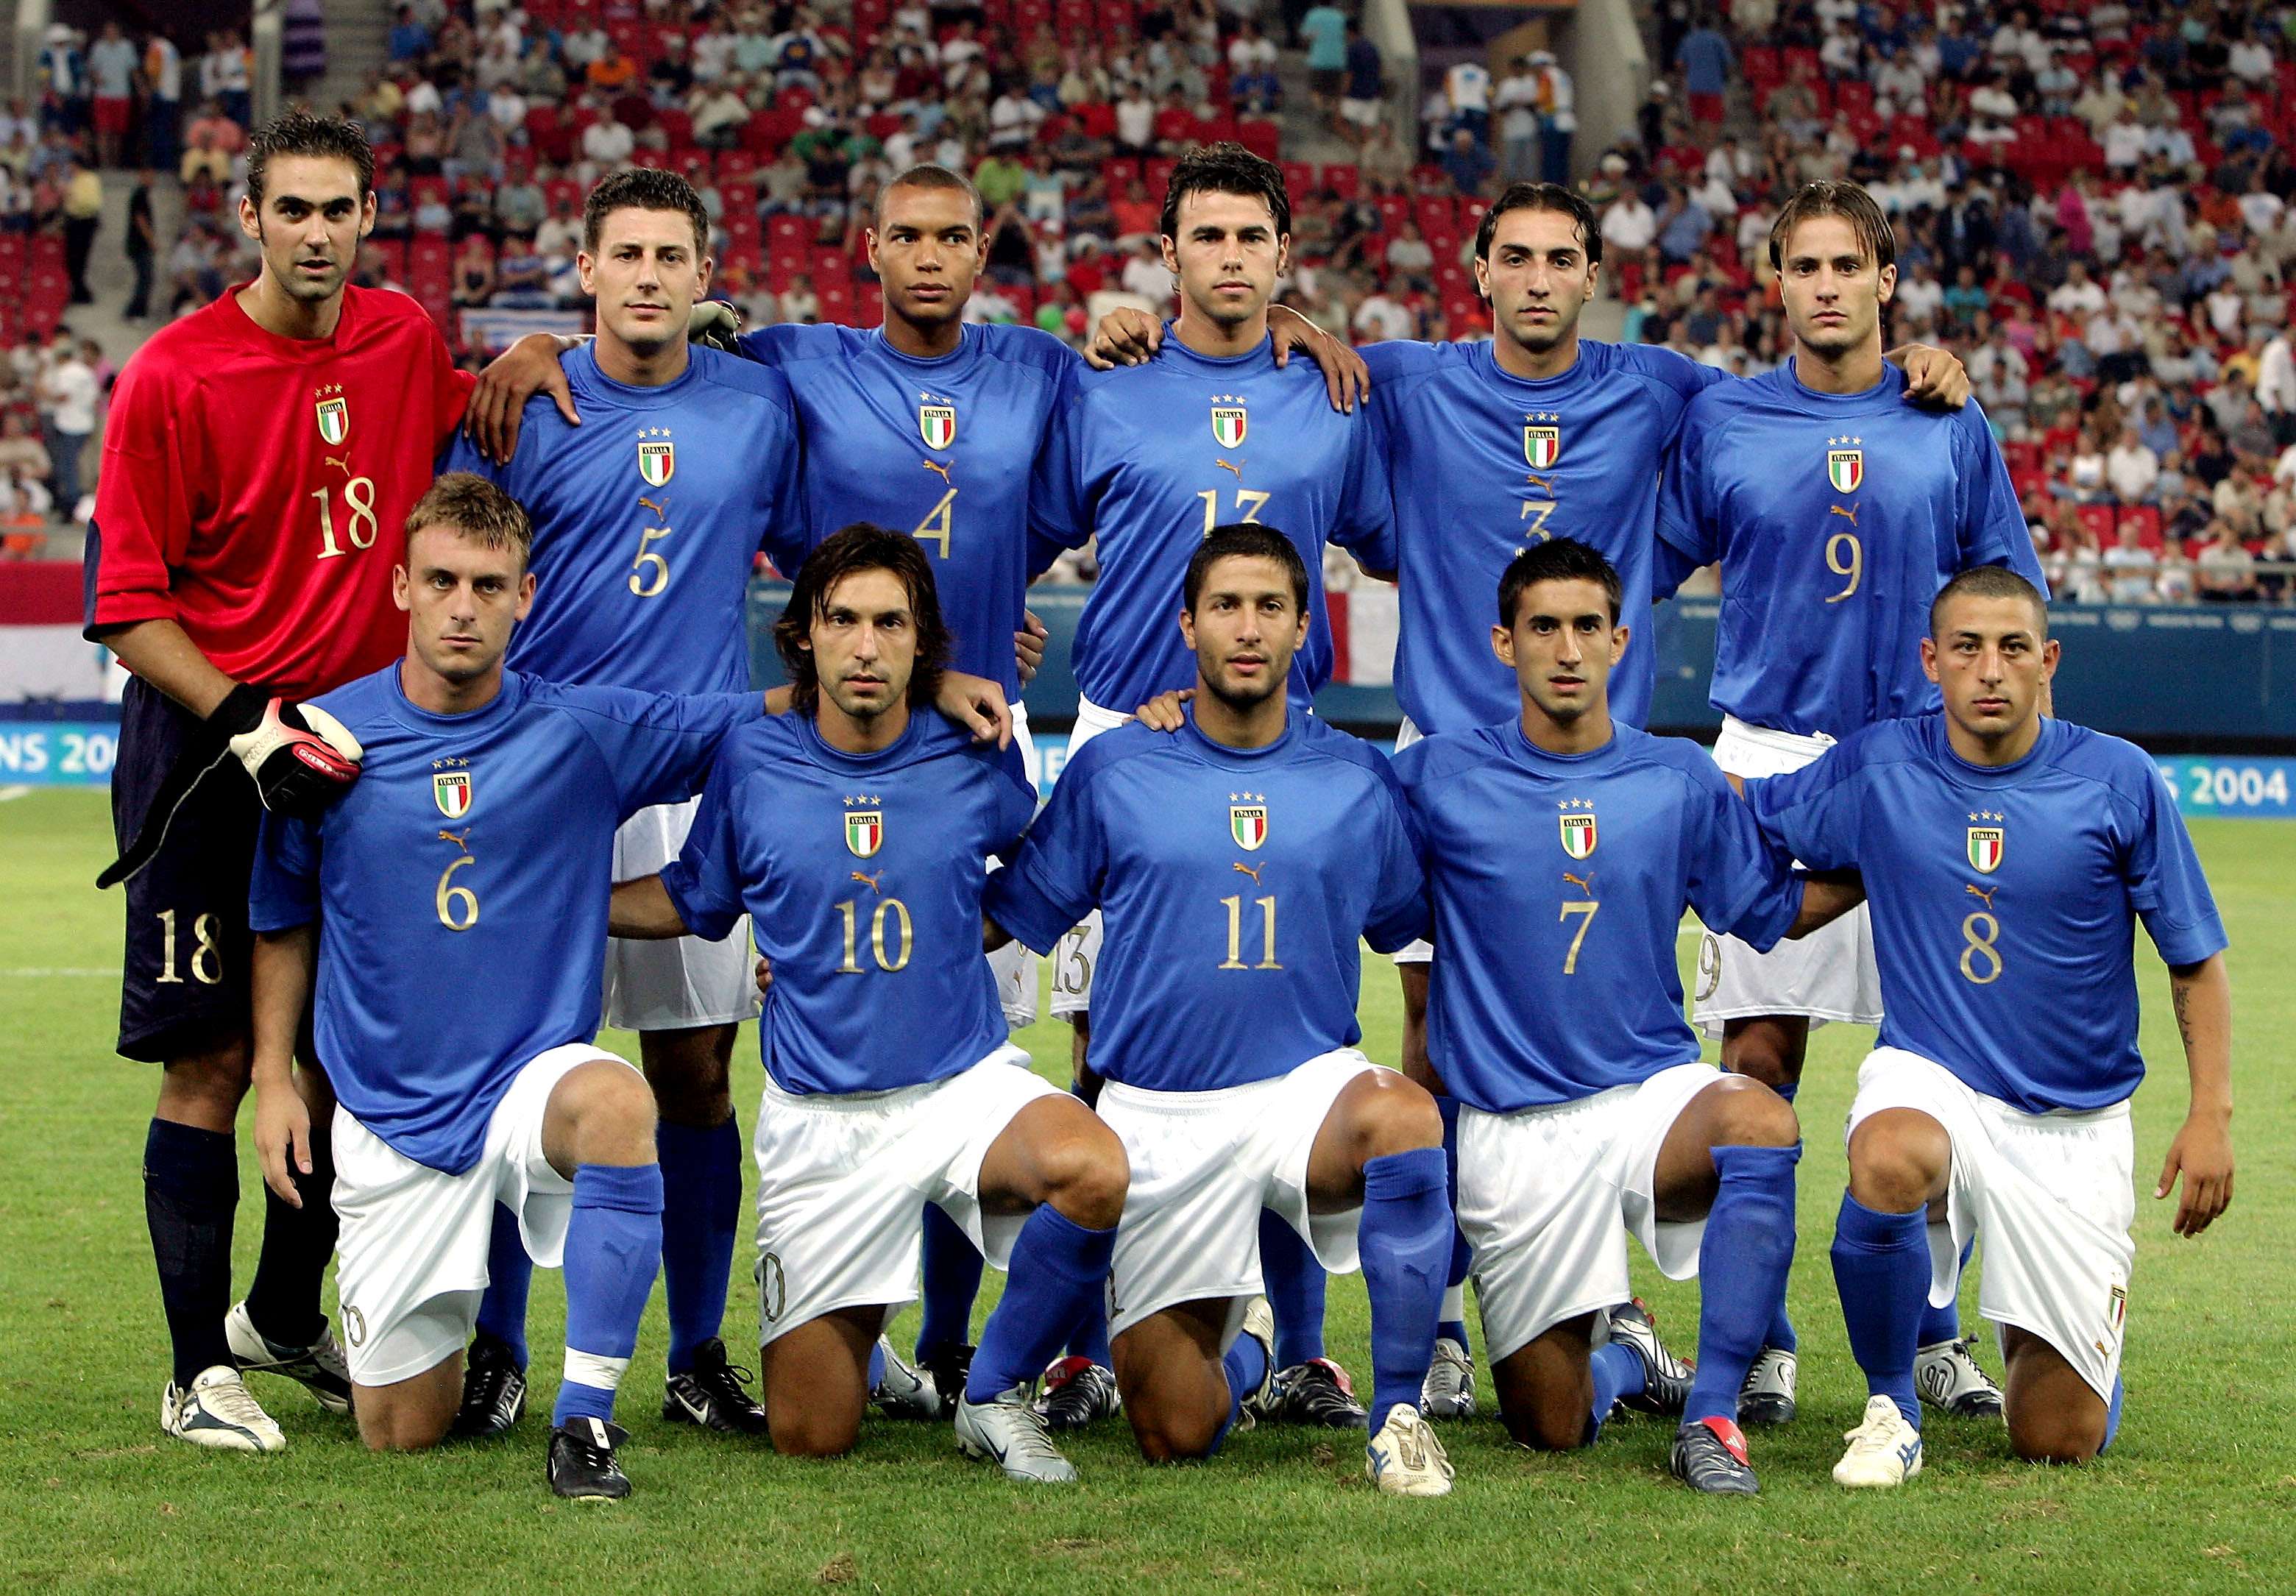 Italy - Olympic 2004